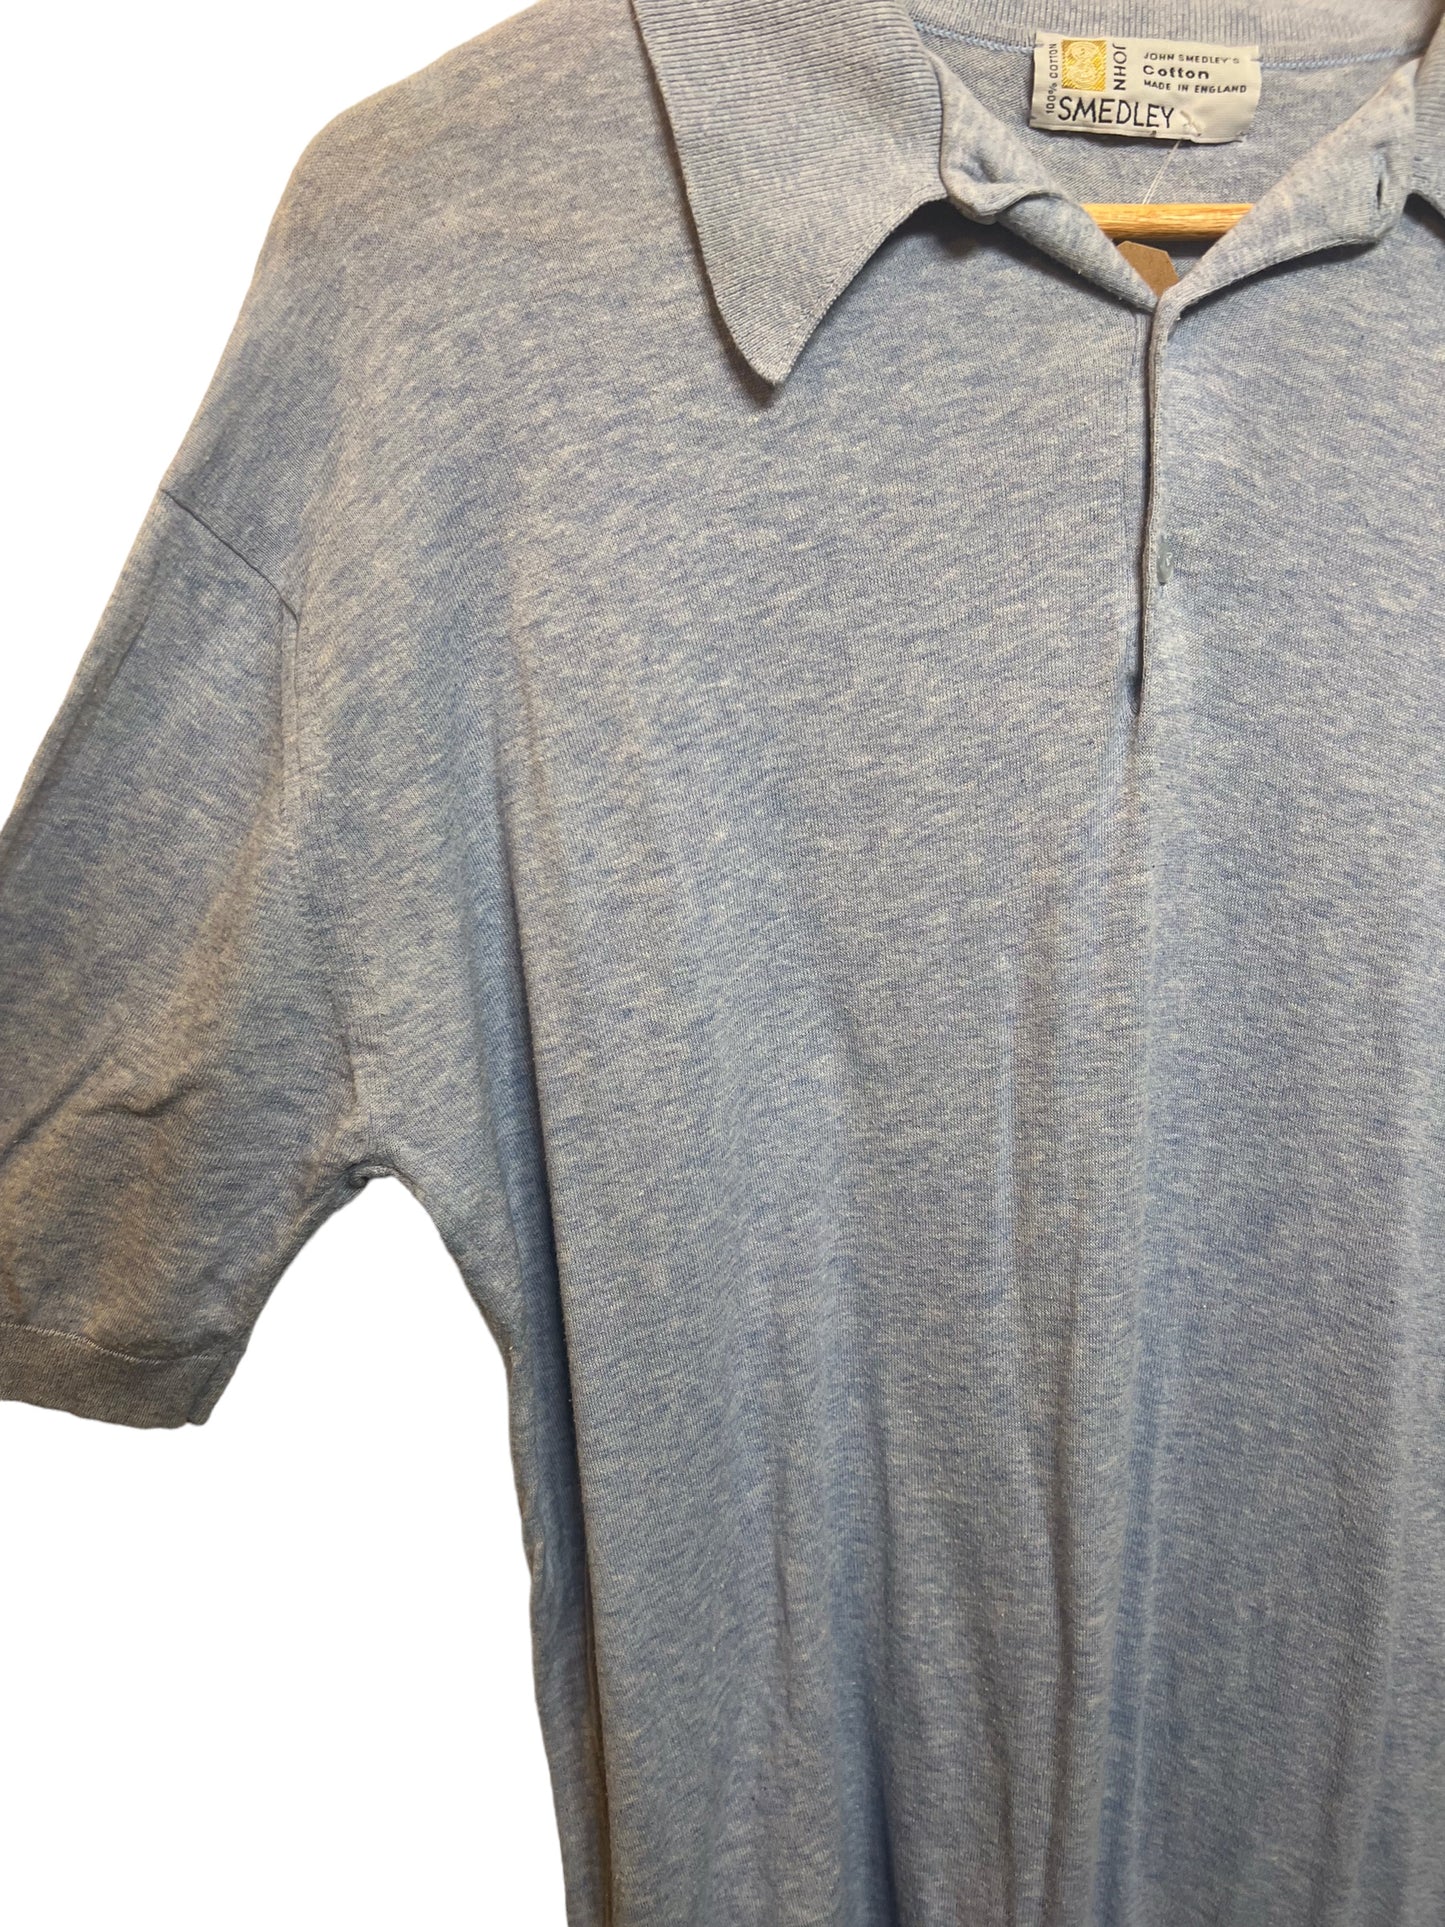 John Smedley Grey Polo T Shirt (Size XL)